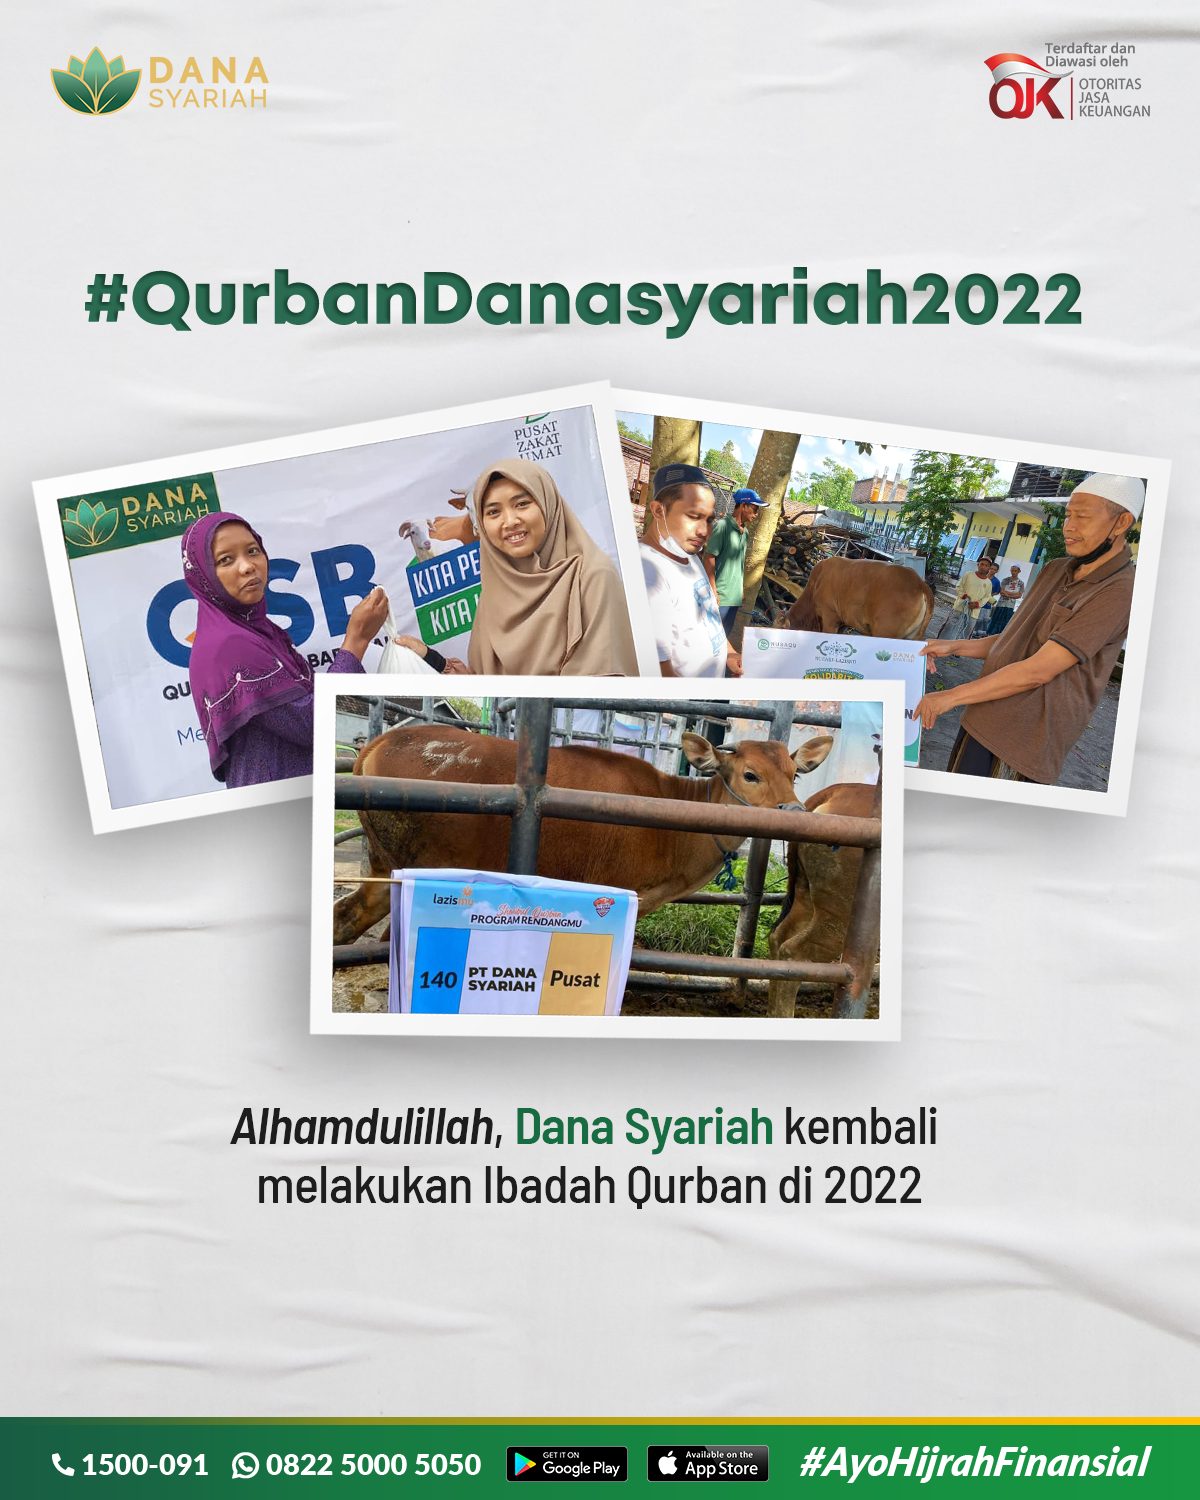 Dana Syariah Alhamdulillah, Dana Syariah kembali melakukan Ibadah Qurban di 2022